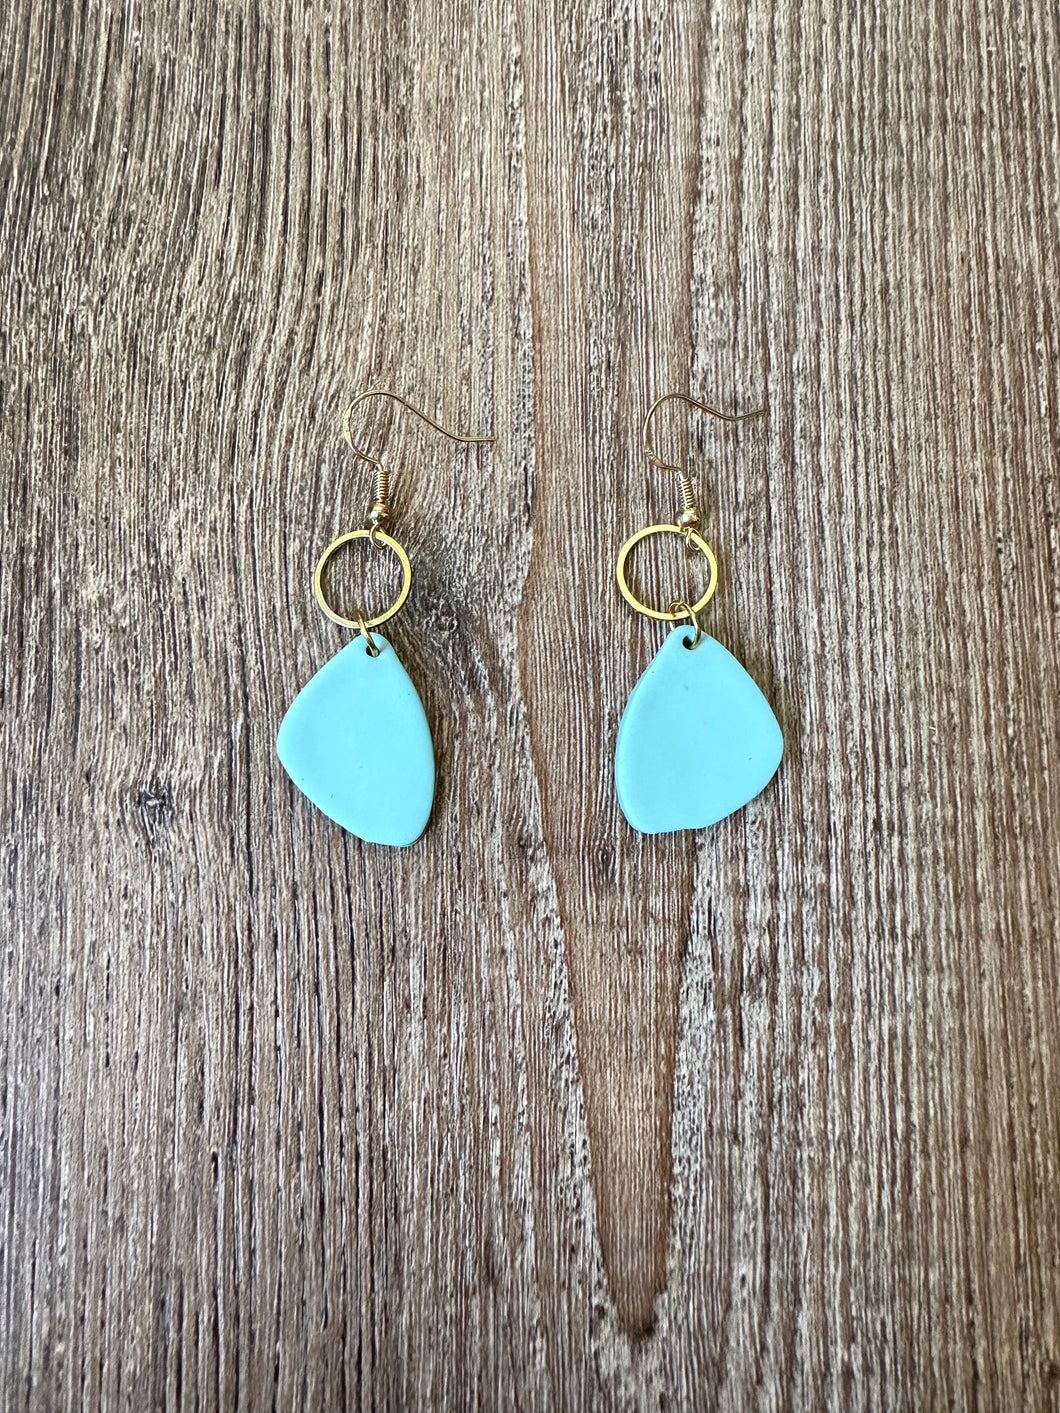 Robin egg blue geometric earrings